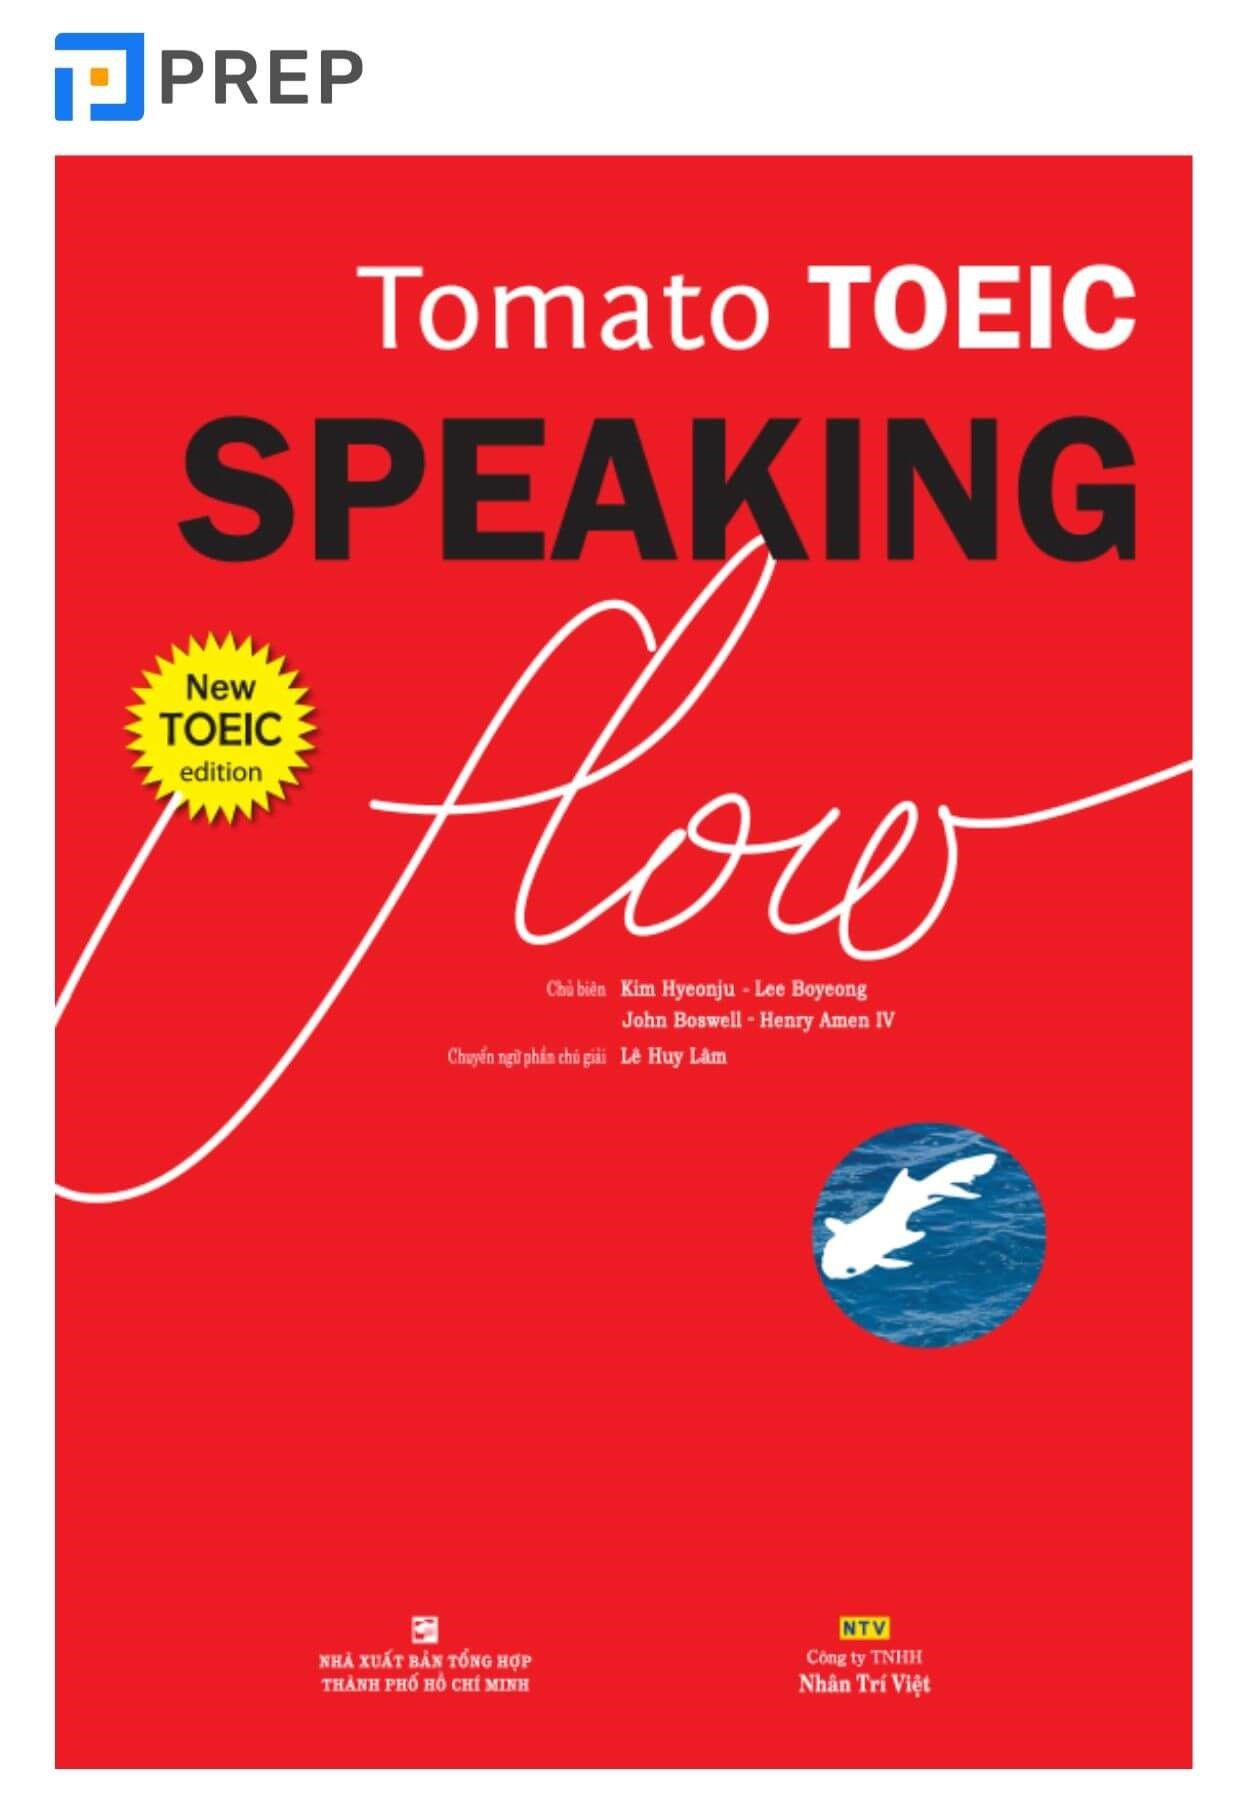 Tomato TOEIC Speaking Flow